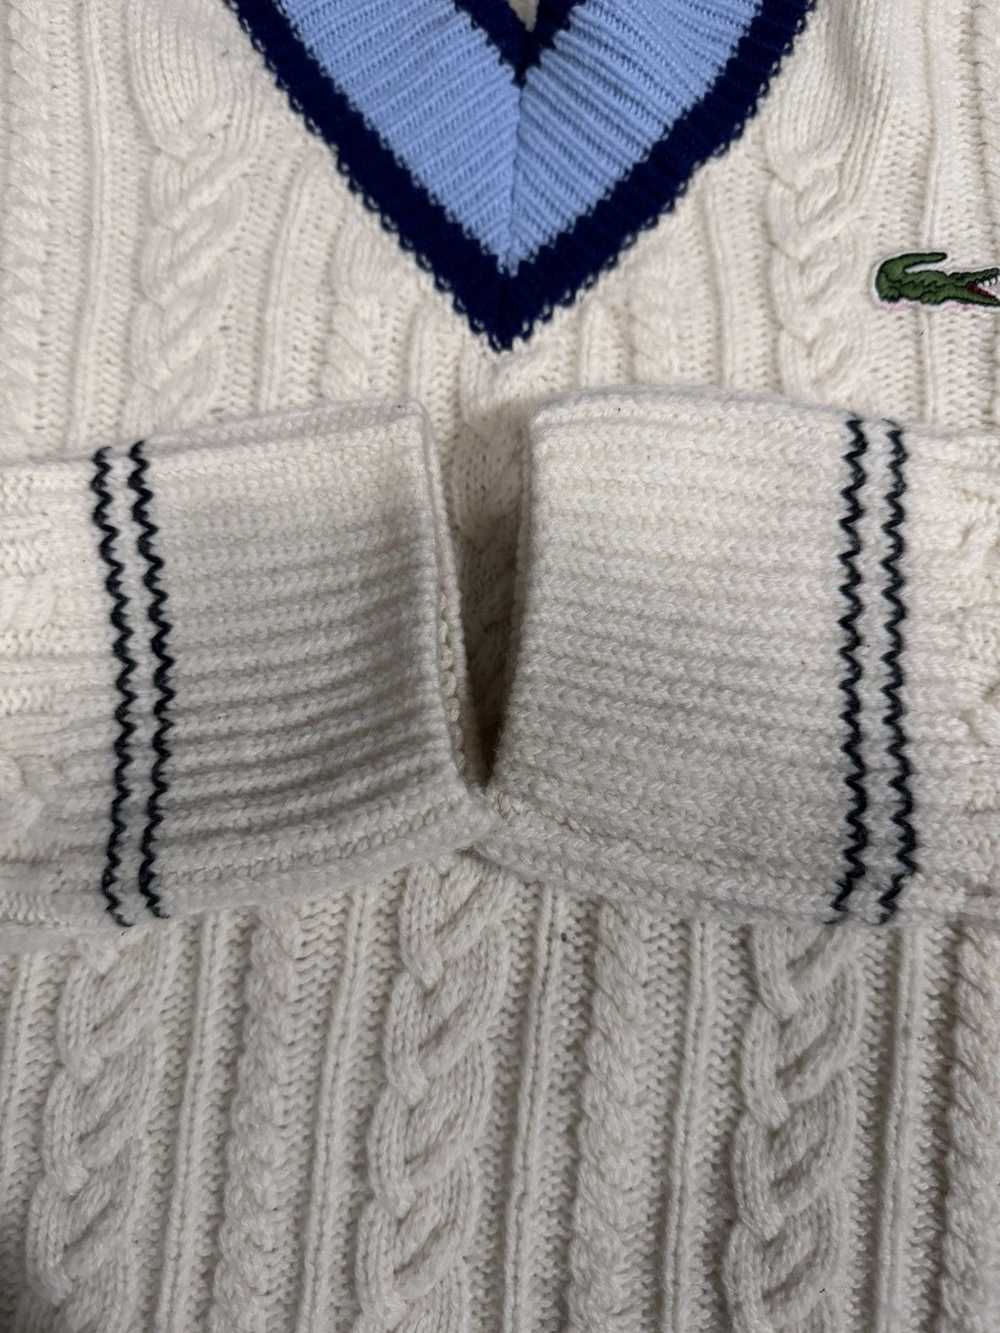 Lacoste Lacoste v neck cricket sweater - image 3